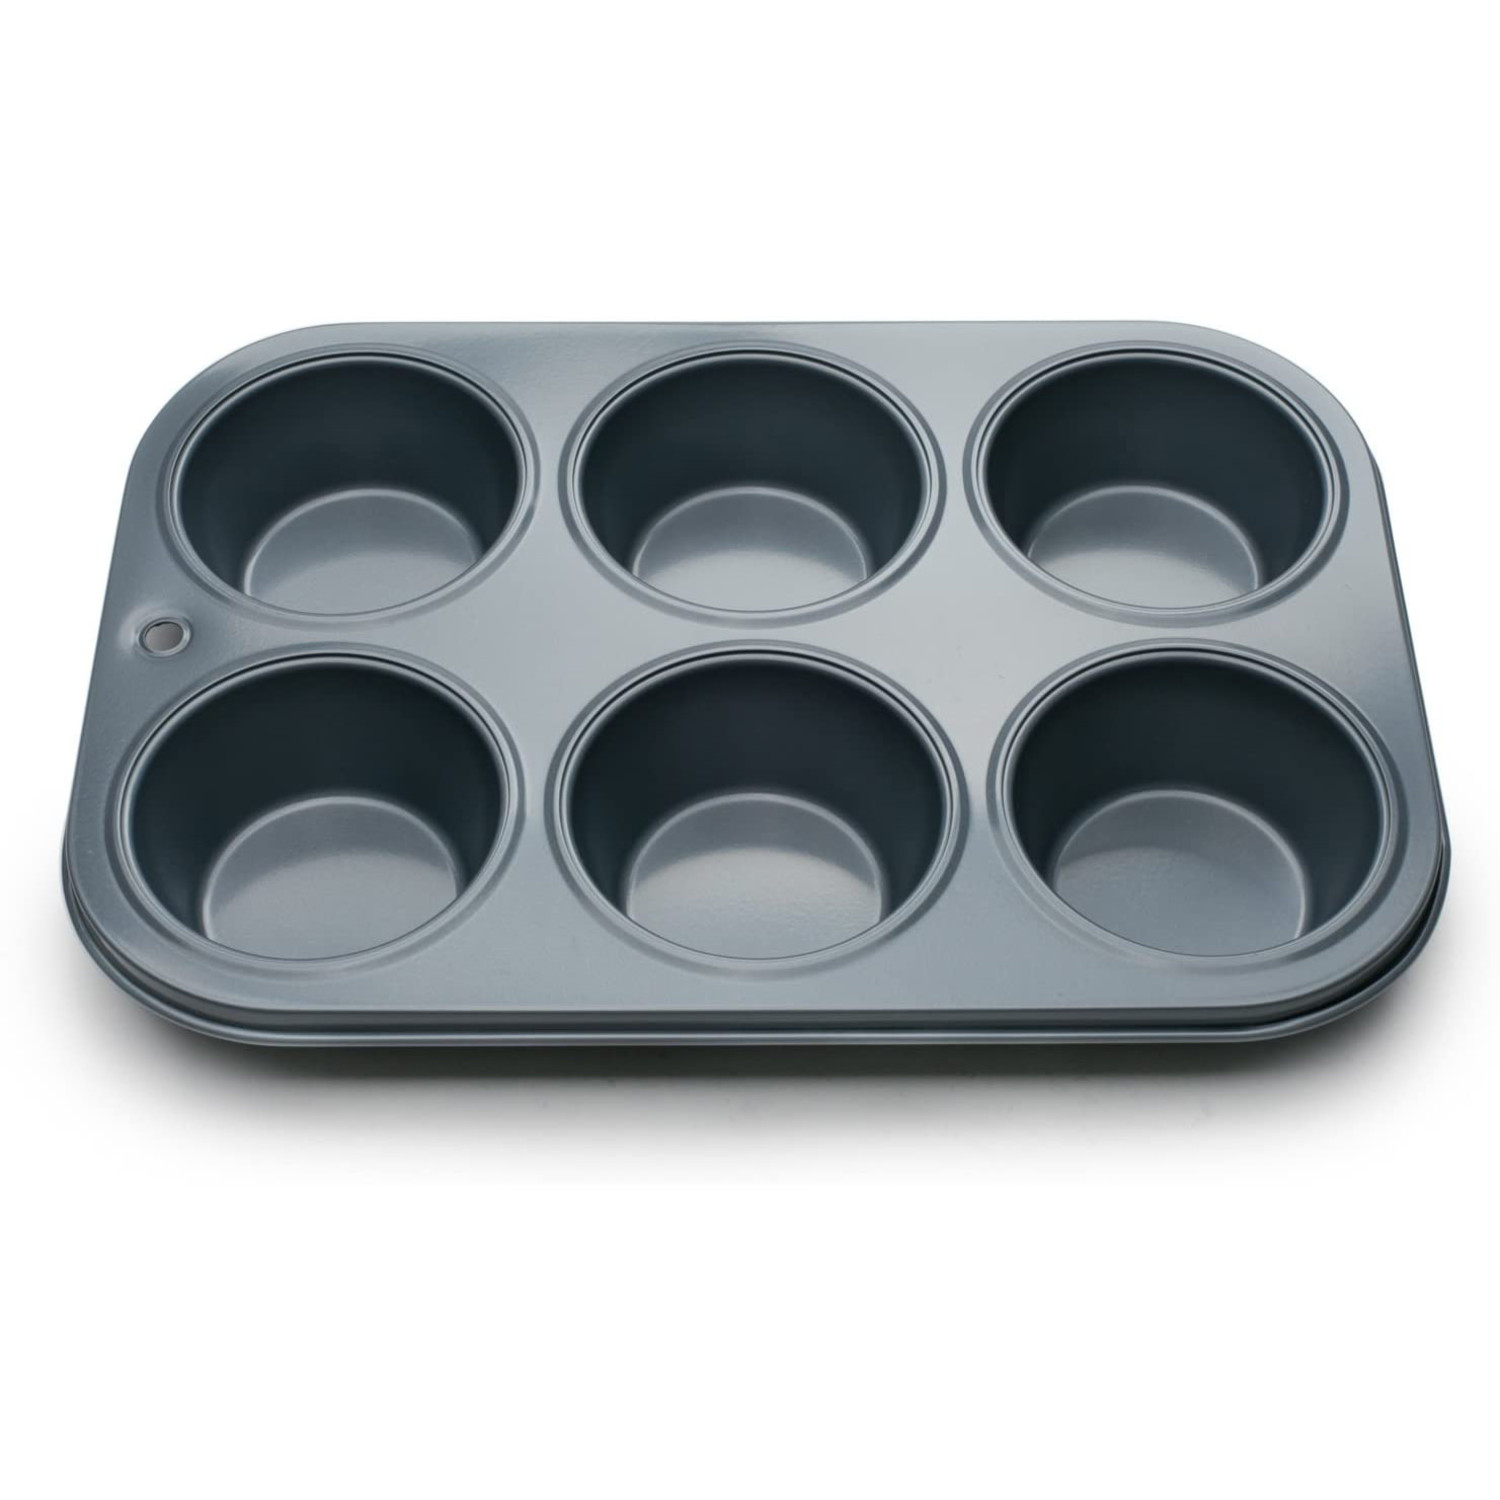 Silicone Muffin Pan, Non-stick Baking Cupcake Pan, 6 Cavity Heat